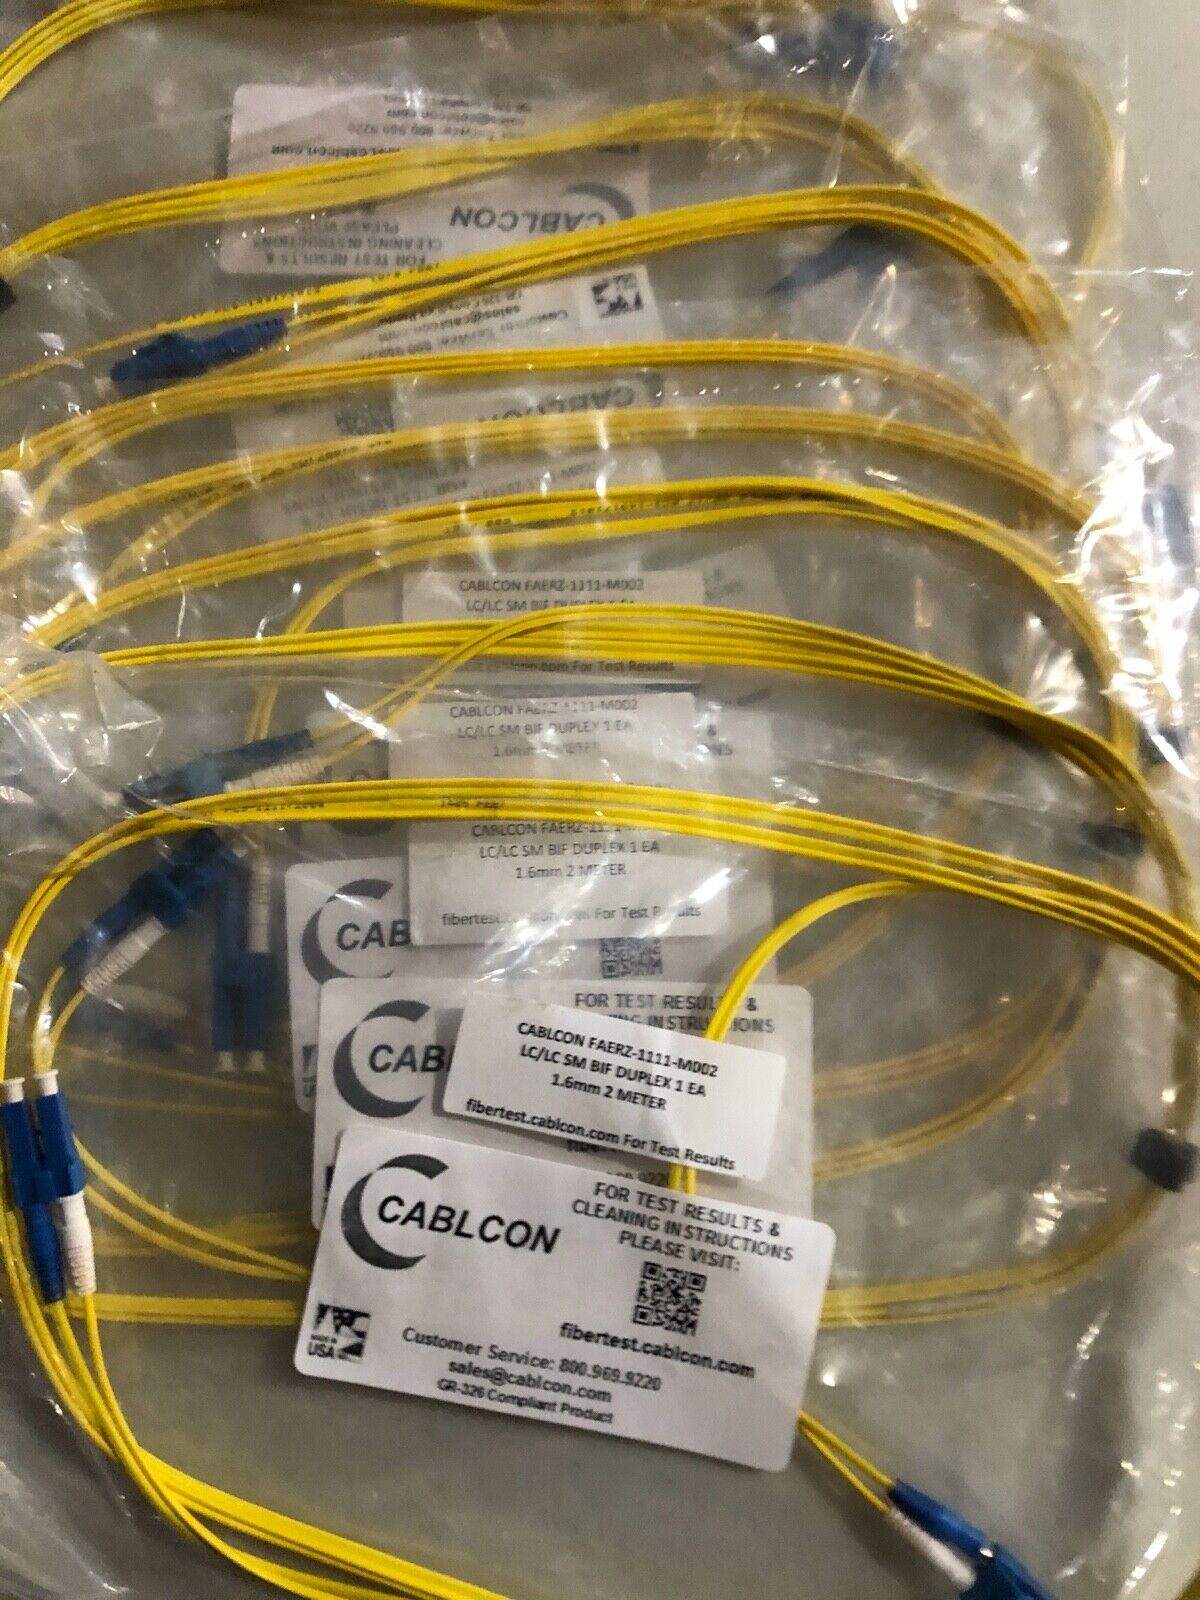 Cablcon FAERZ-1111-M002 Fiber Optic Cable Test Kits Hugh LOT  NEW